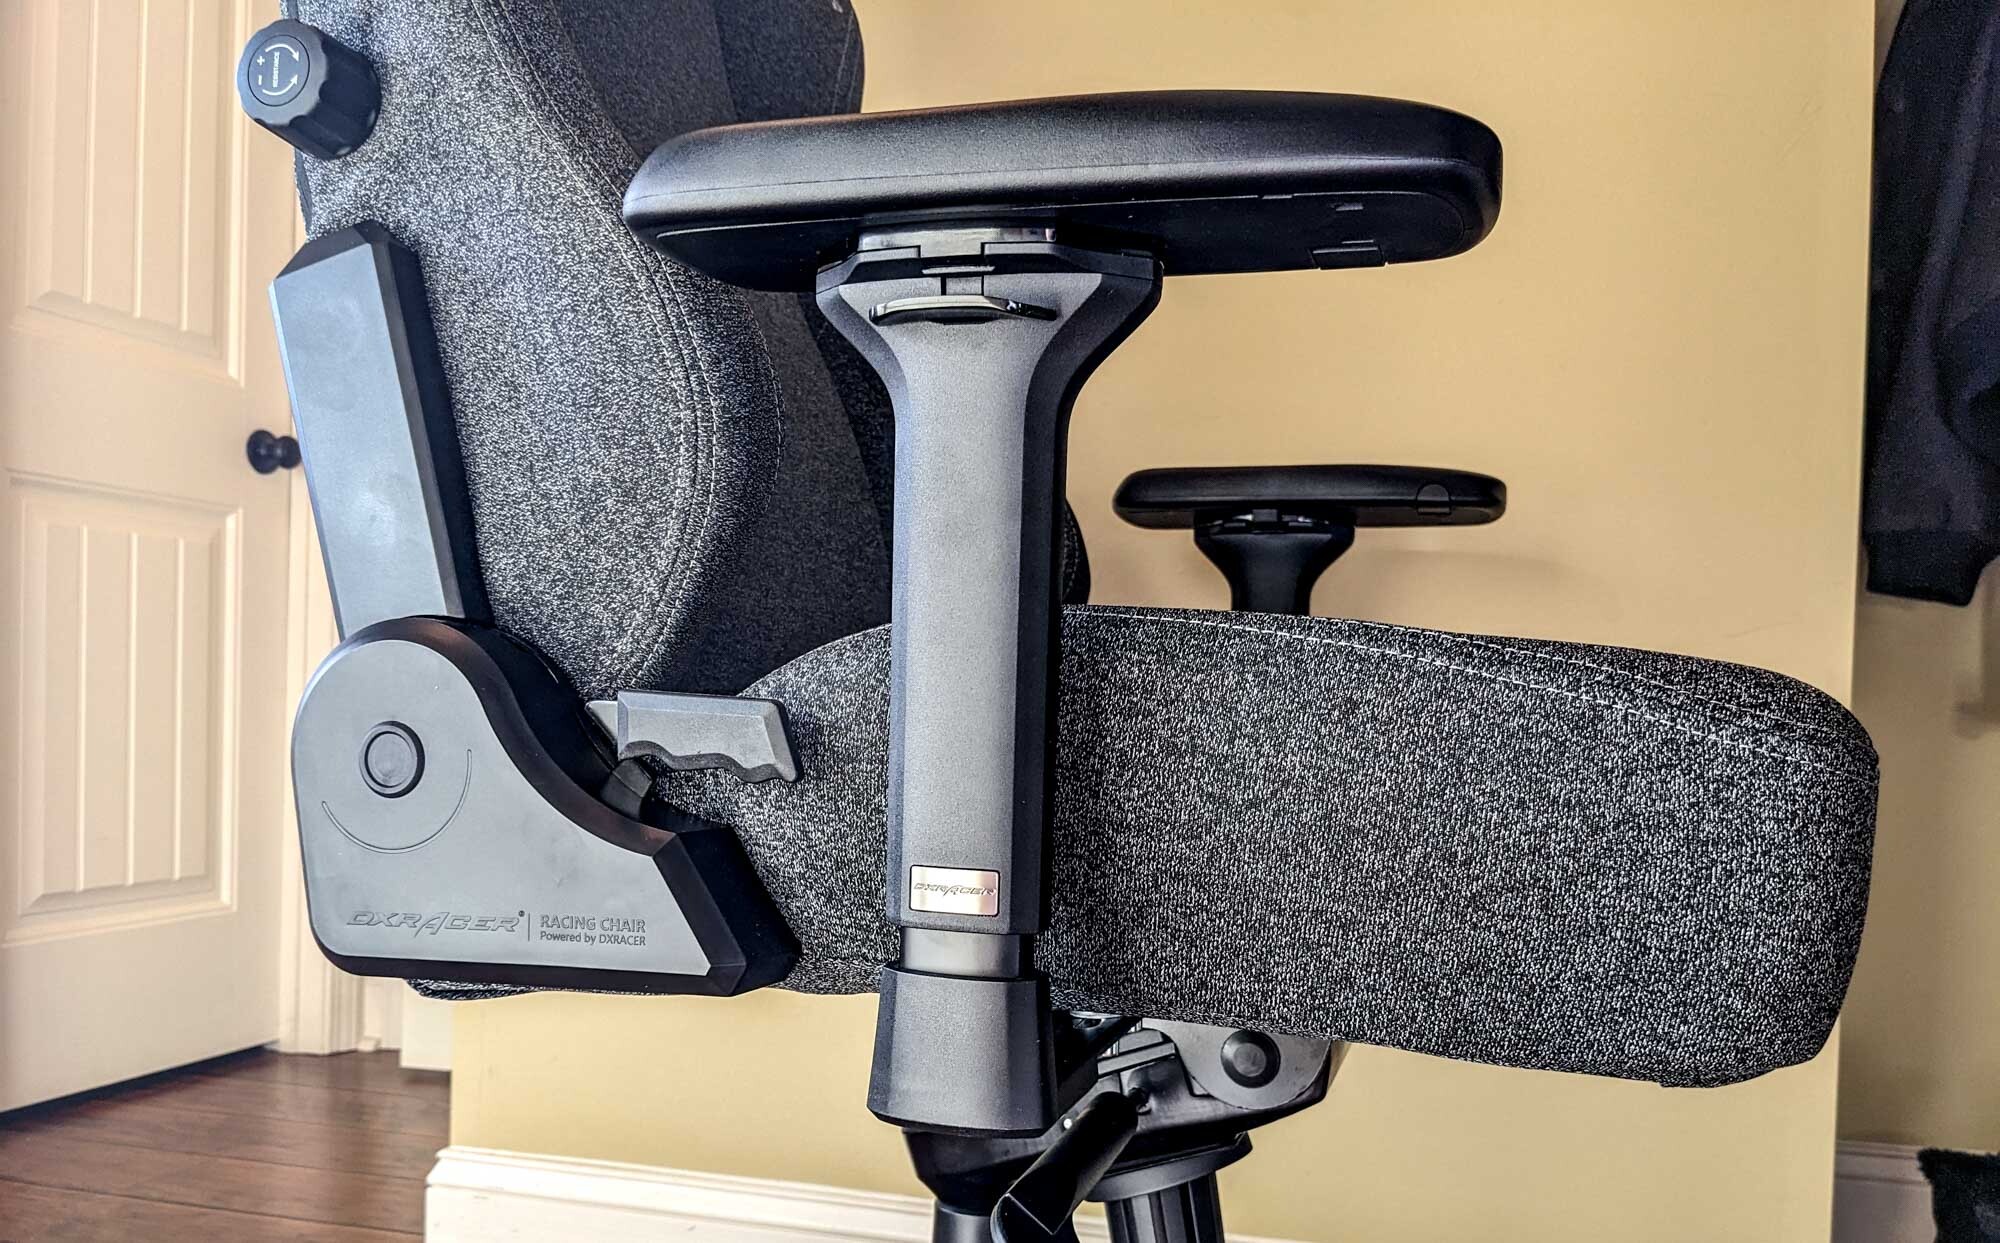 The adjustment knobs and armrests on the DXRacer Craft